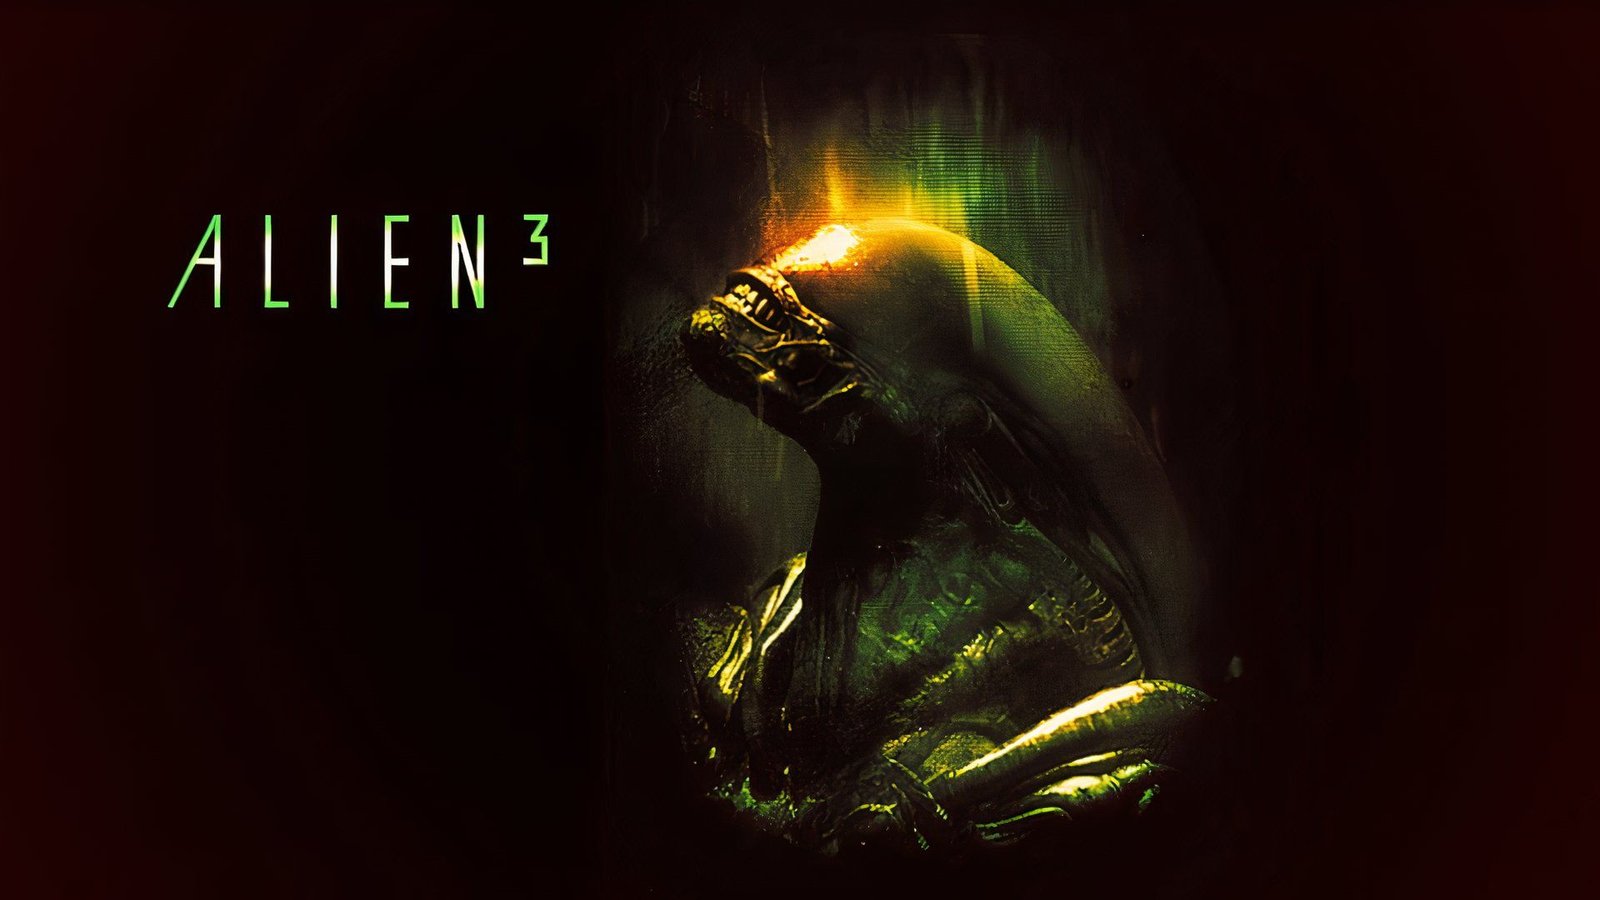 Original Alien 3 Director Explains His Version Would've Been Much Better